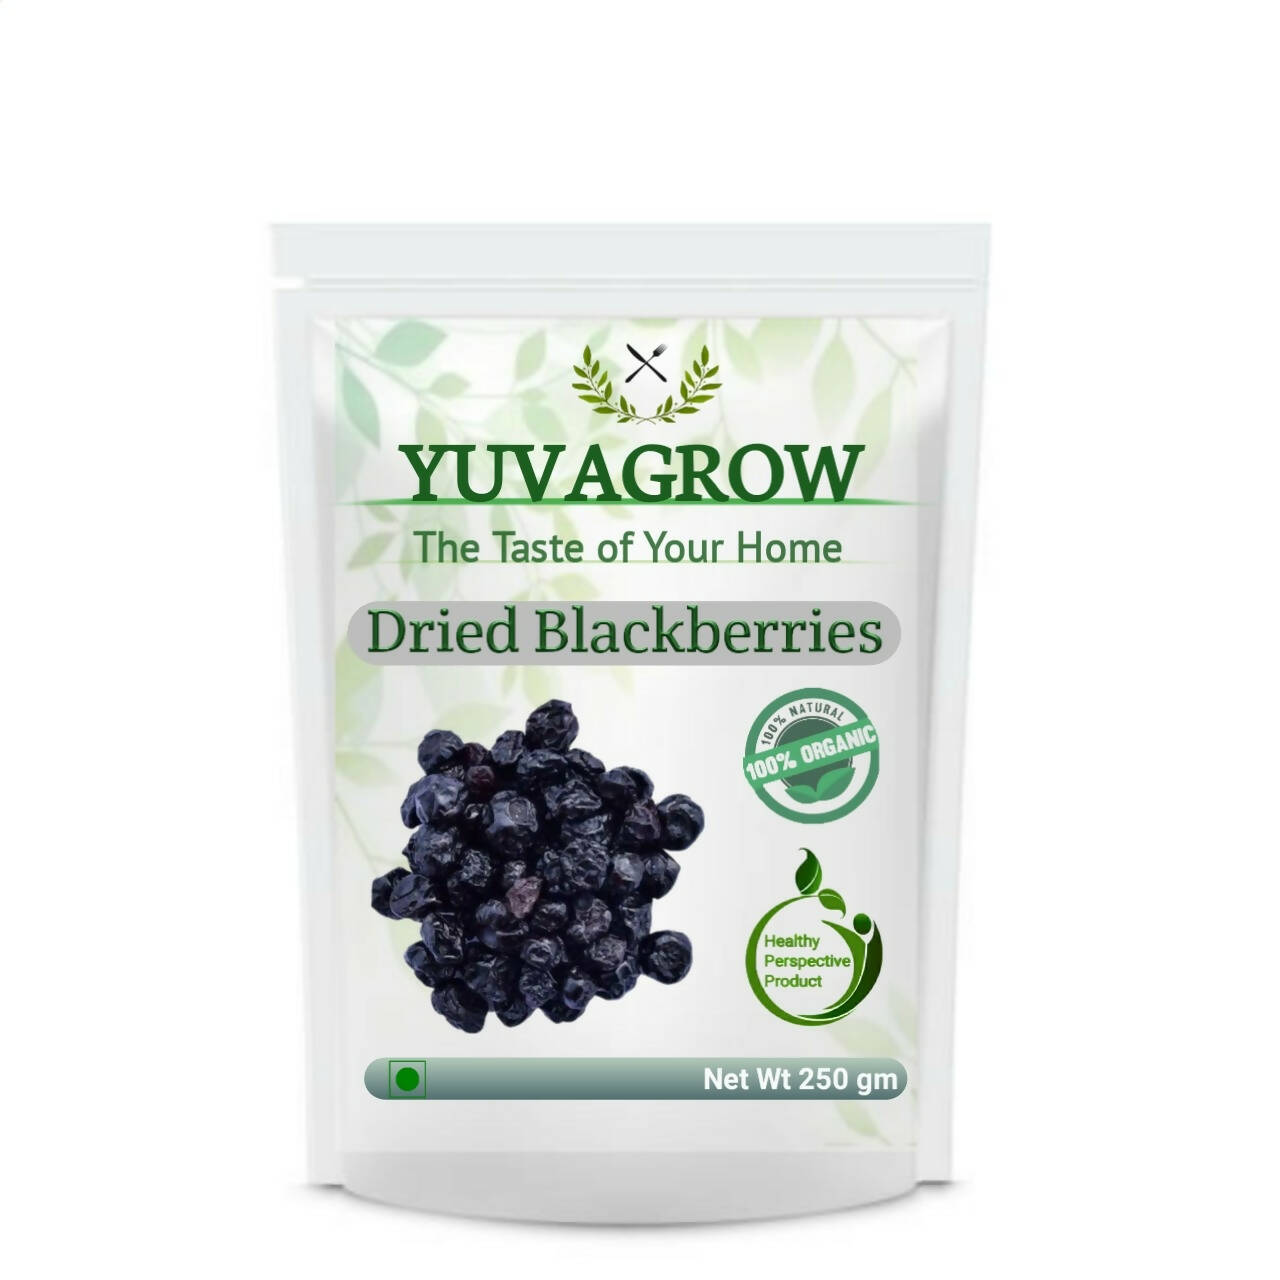 Yuvagrow Dried Blackberries - buy in USA, Australia, Canada